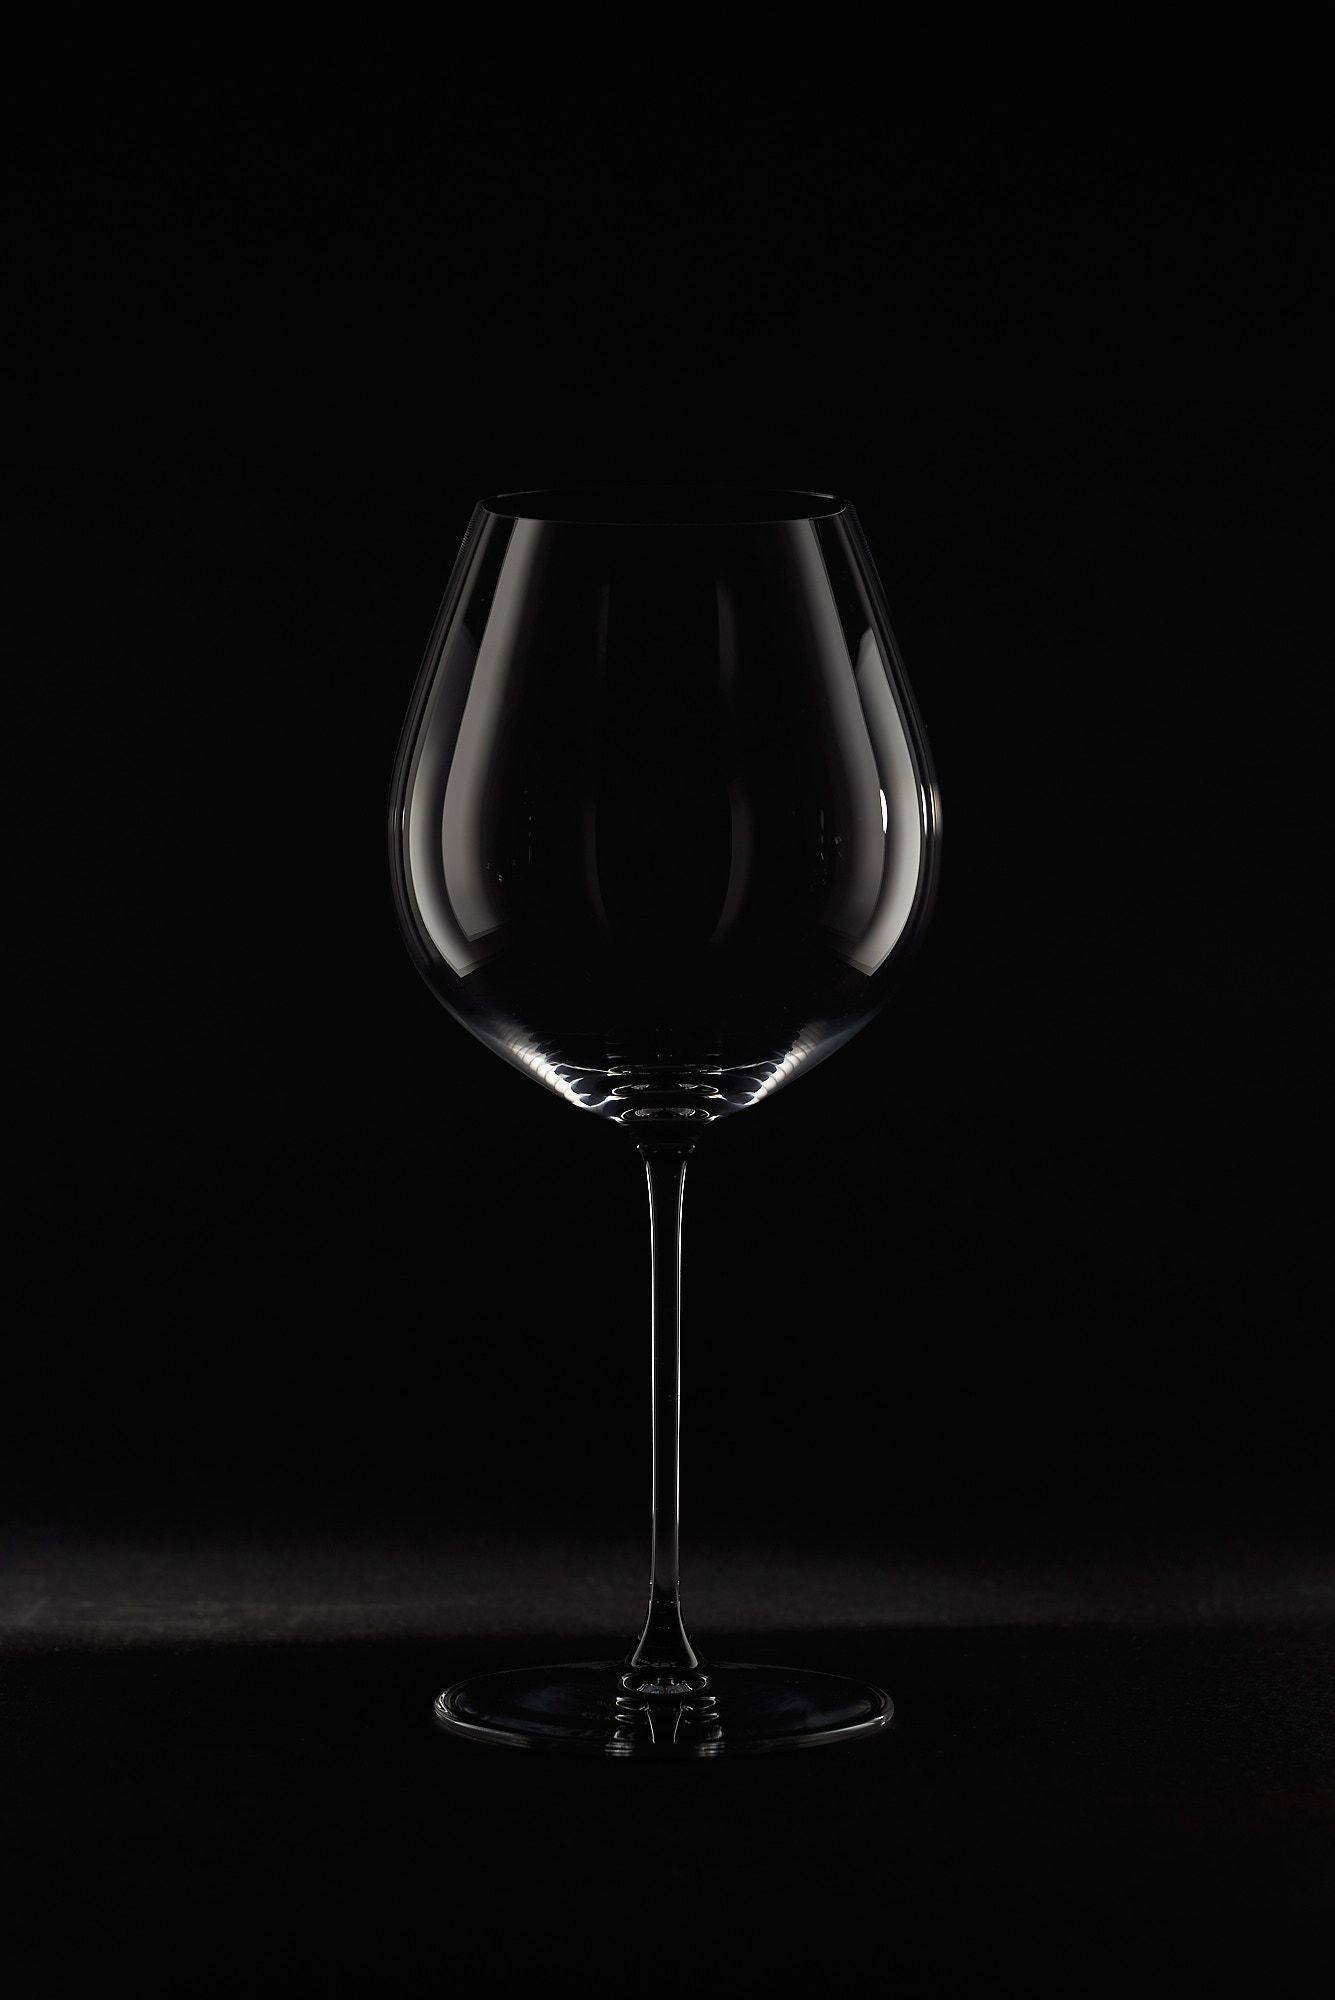 riedel veritas old world pinot noir wine glass on black background